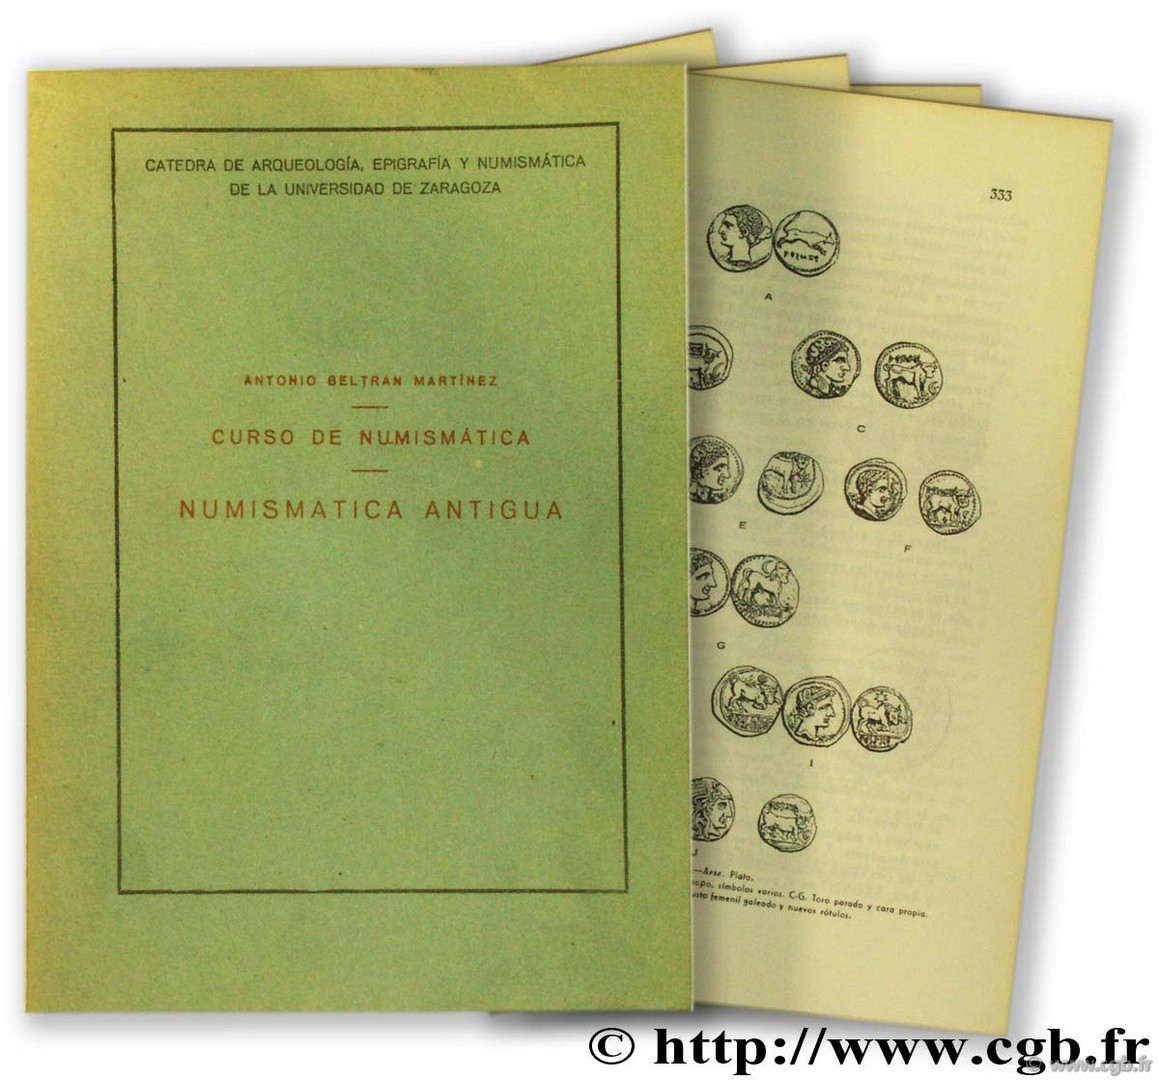 Curso de Numismática. Numismatica Antigua BELTRAN MARTINEZ A.